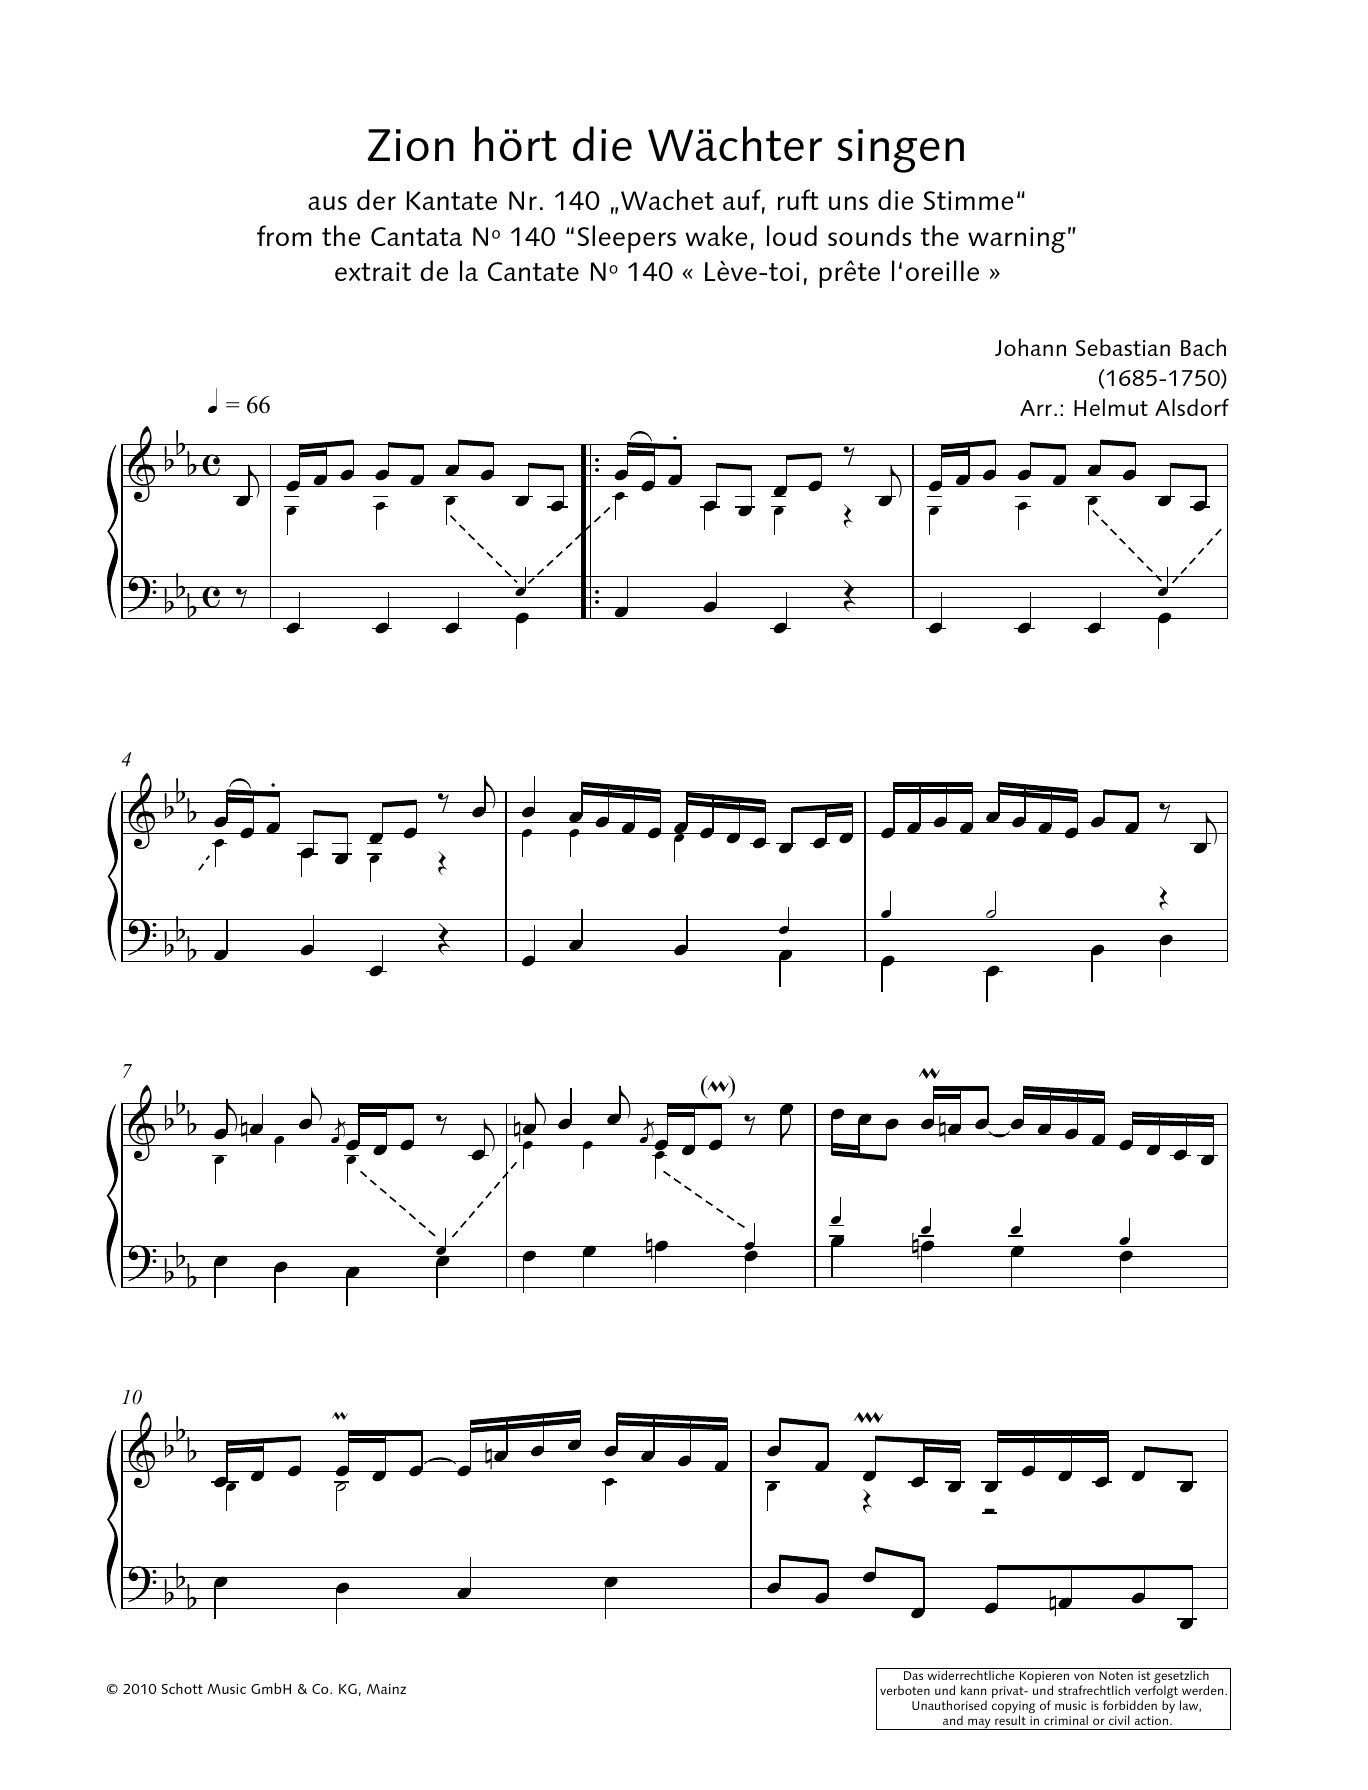 Hans-Gunter Heumann Zion hört die Wächter singen Sheet Music Notes & Chords for Piano Solo - Download or Print PDF